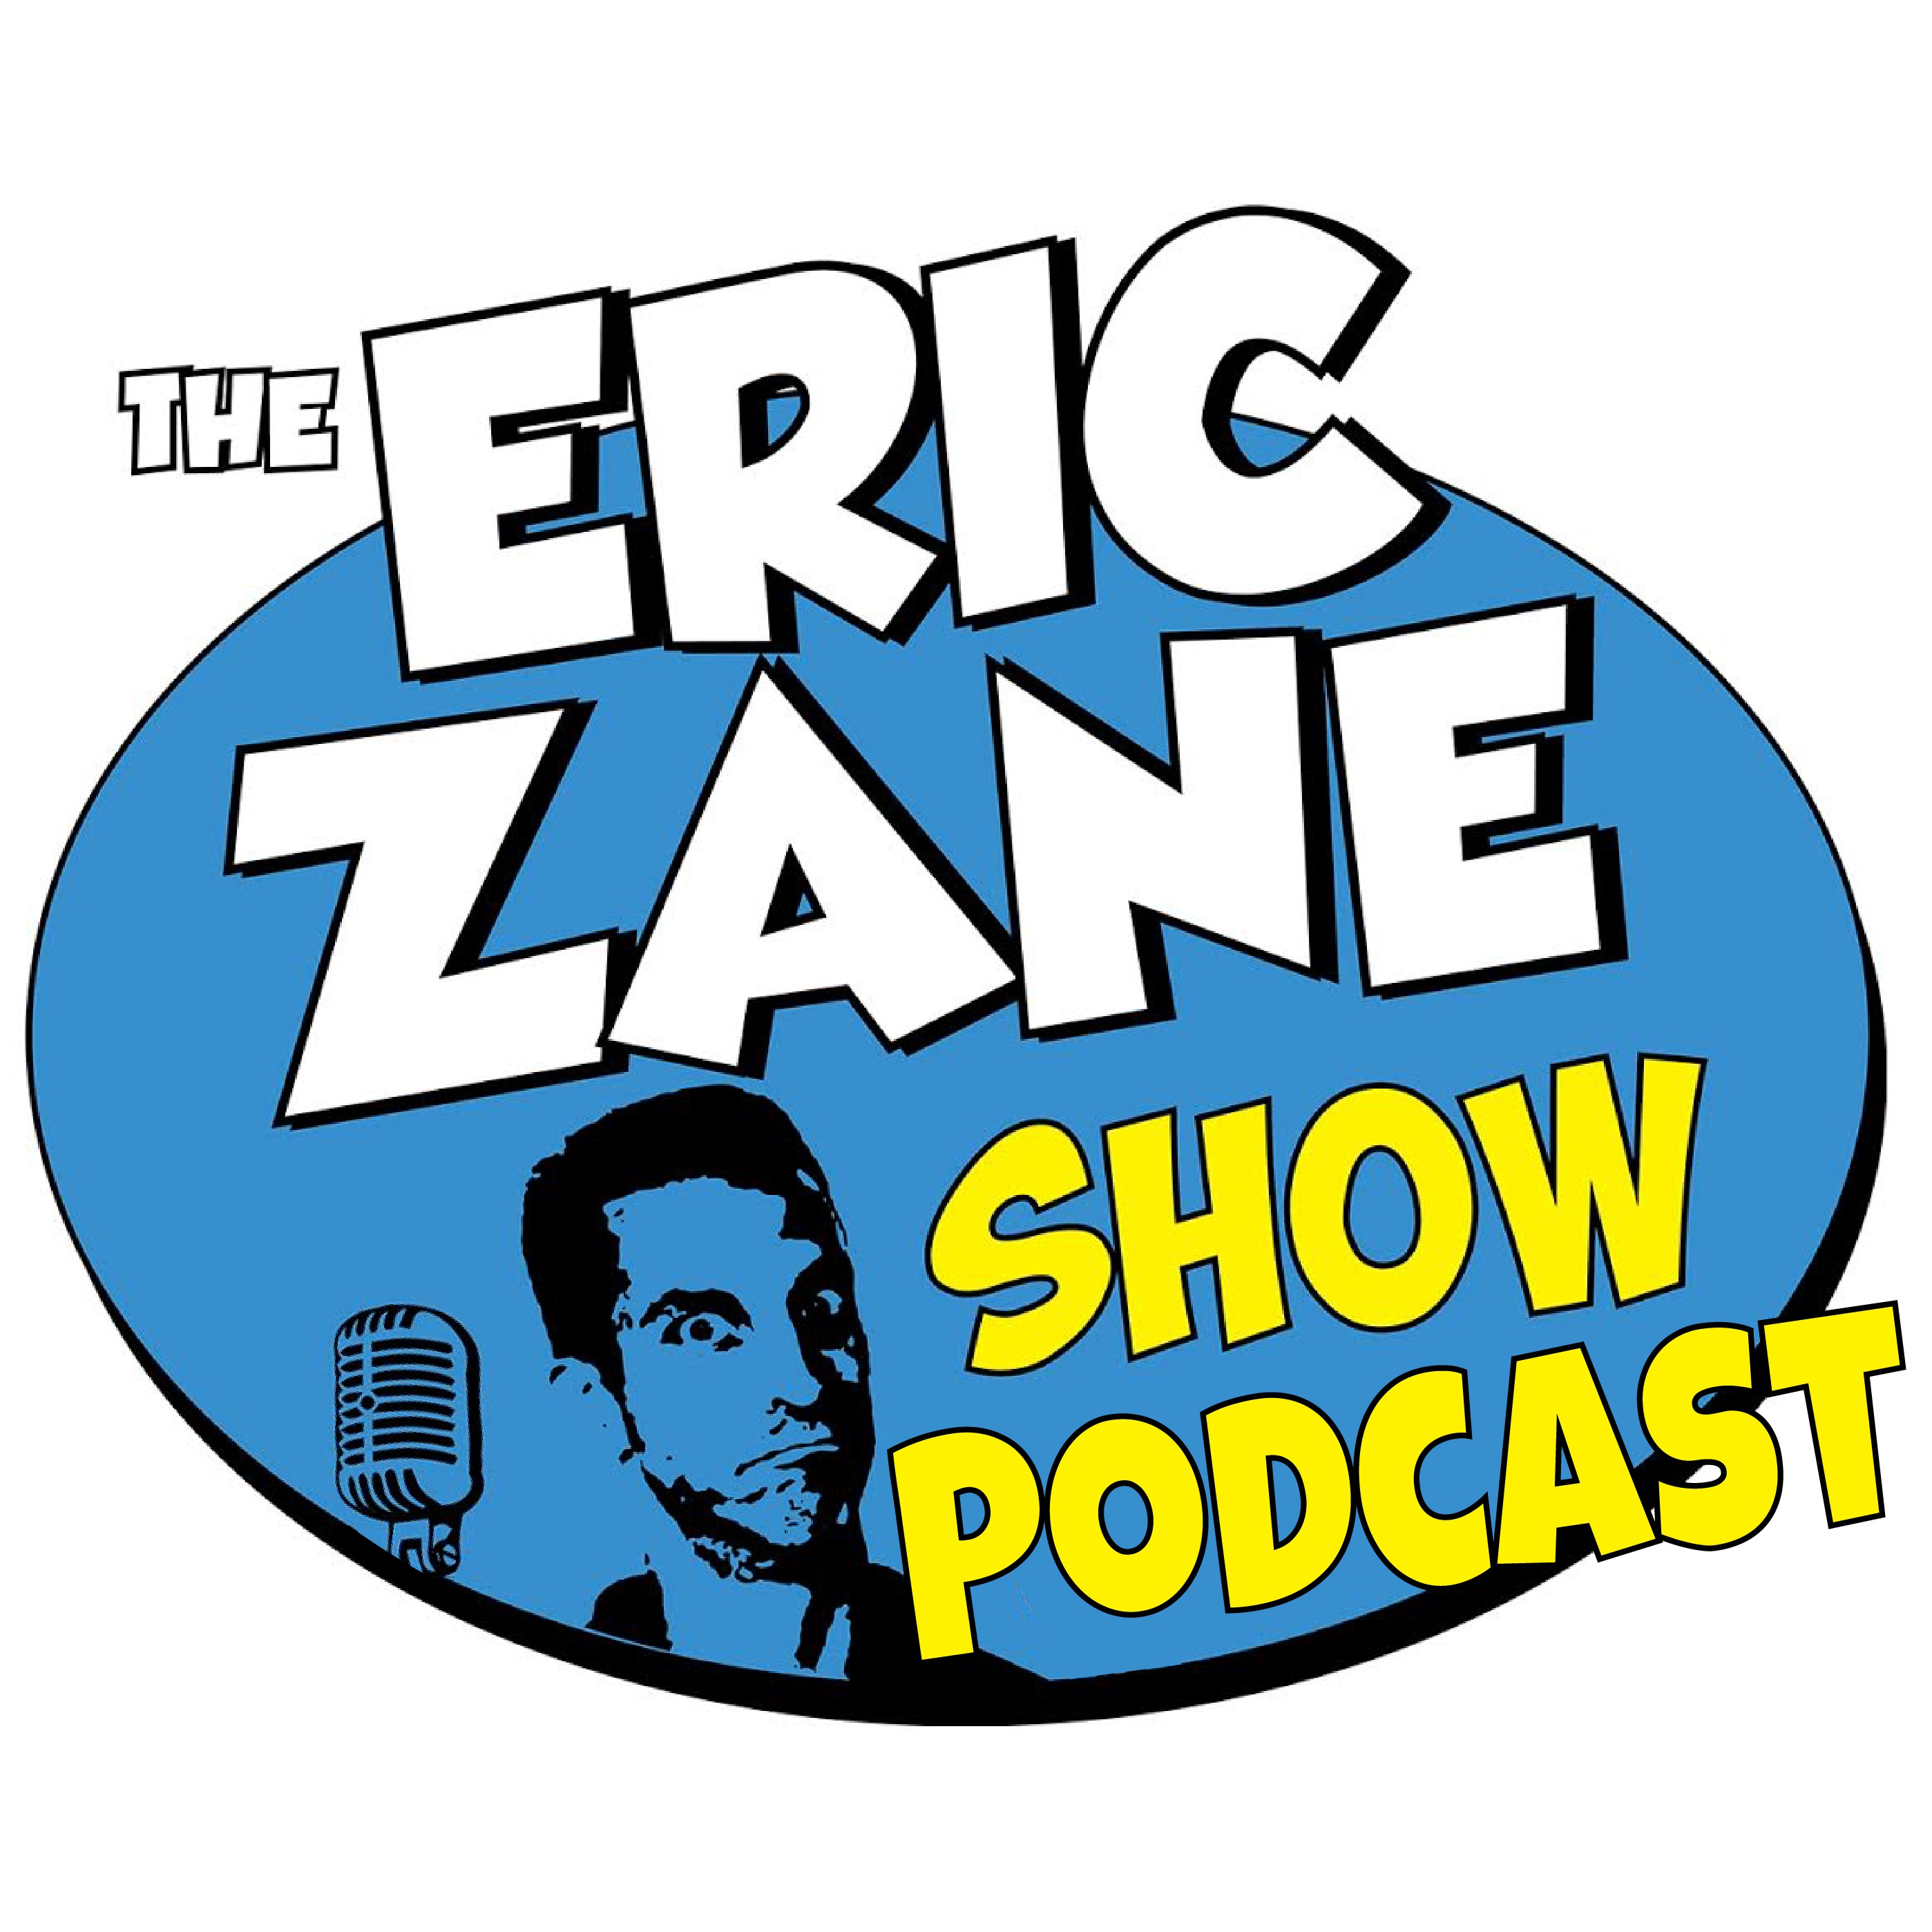 Eric Zane Show Podcast 911 I made it awkward again